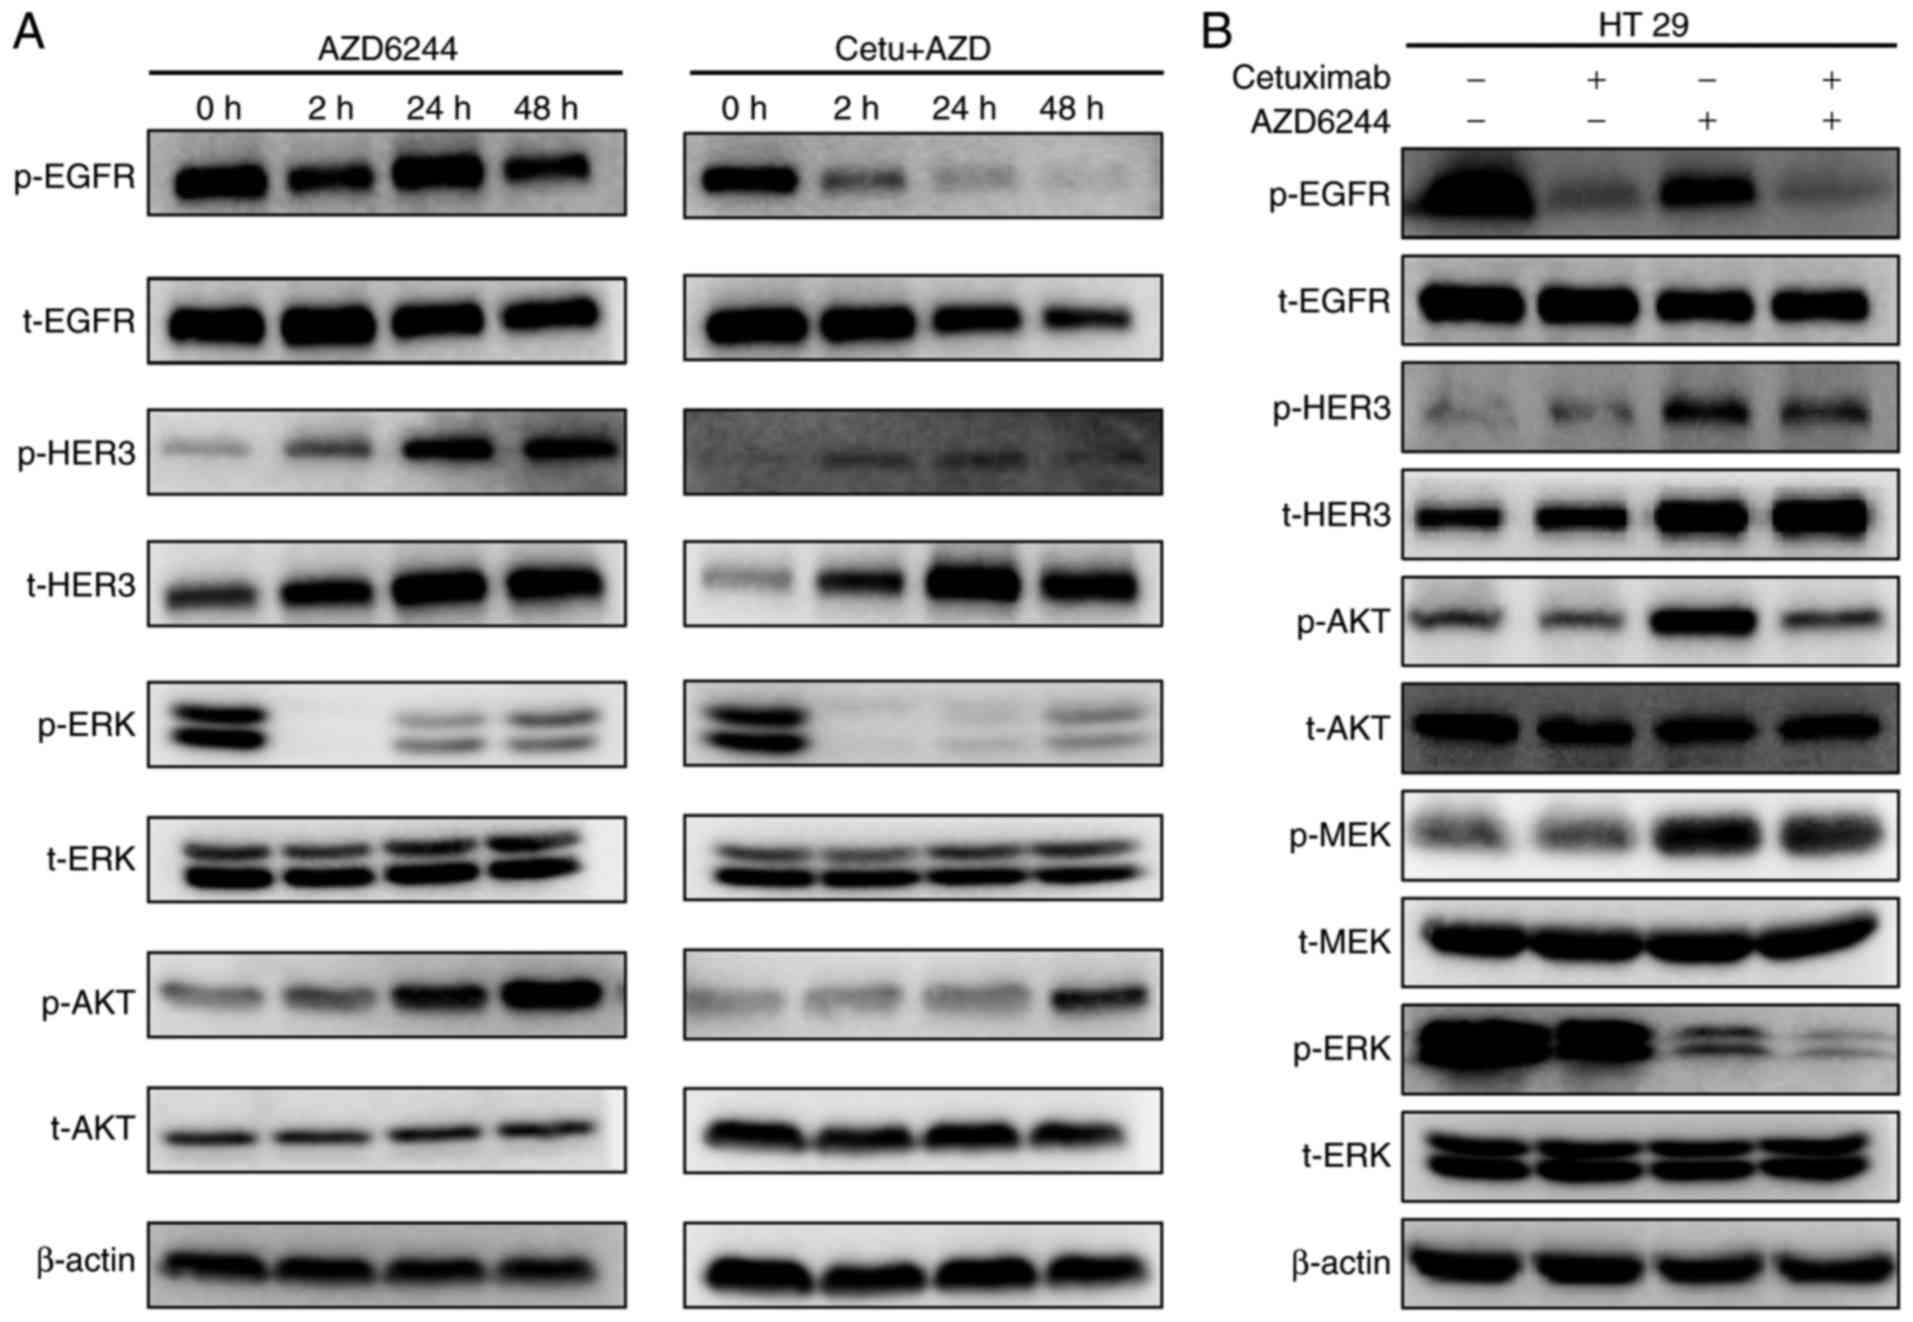 Cetuximab improves AZD6244 antitumor activity in 